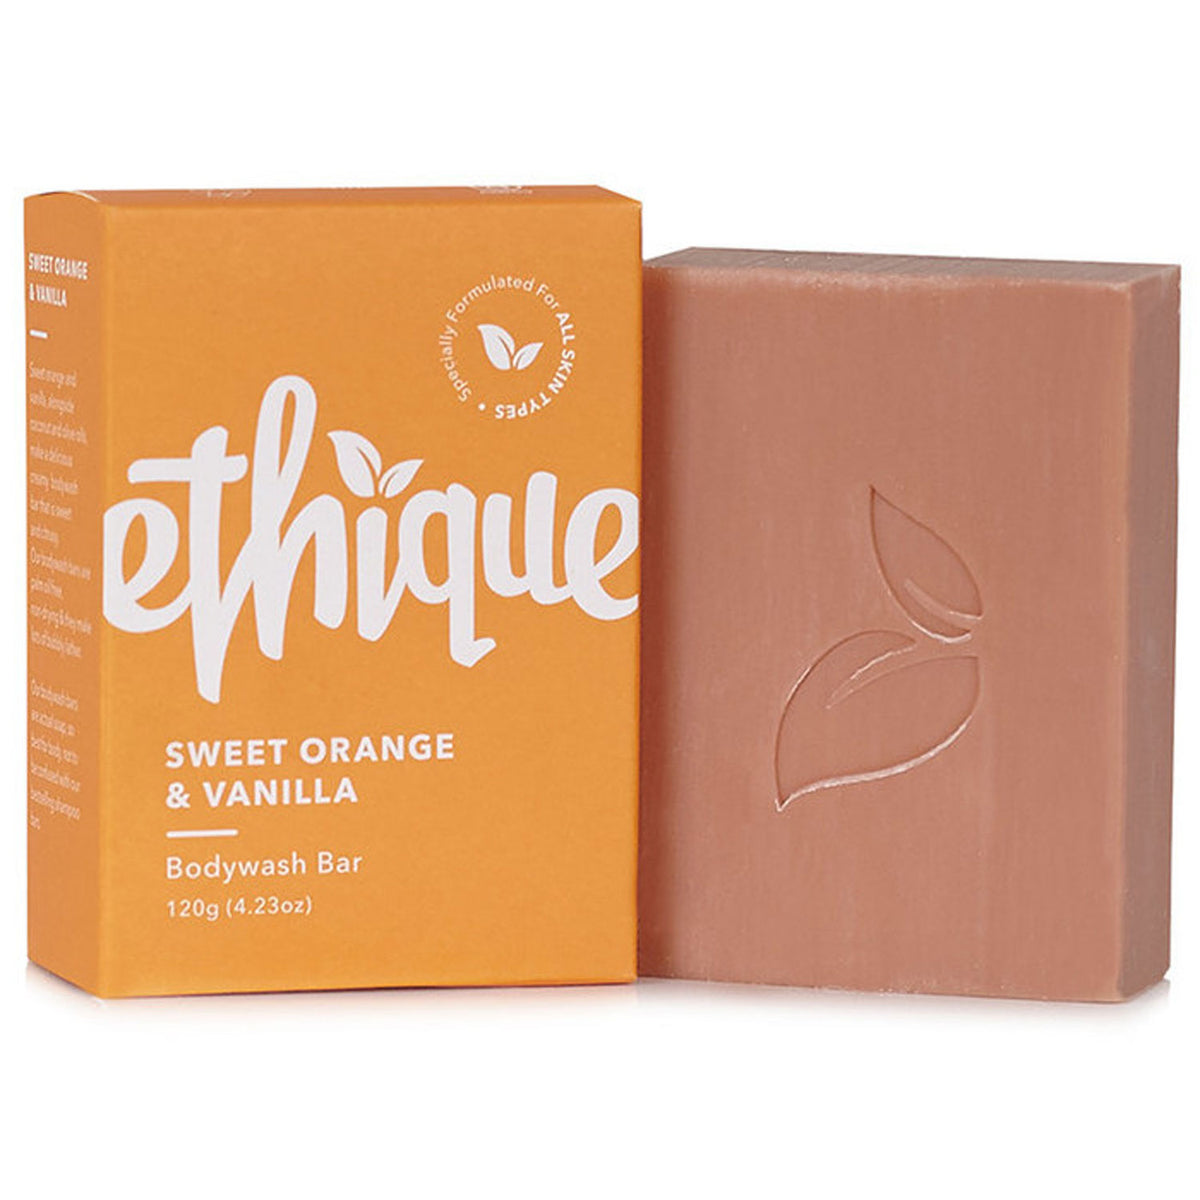 Ethique Sweet Orange & Vanilla Bodywash Bar 120g - Orcadia